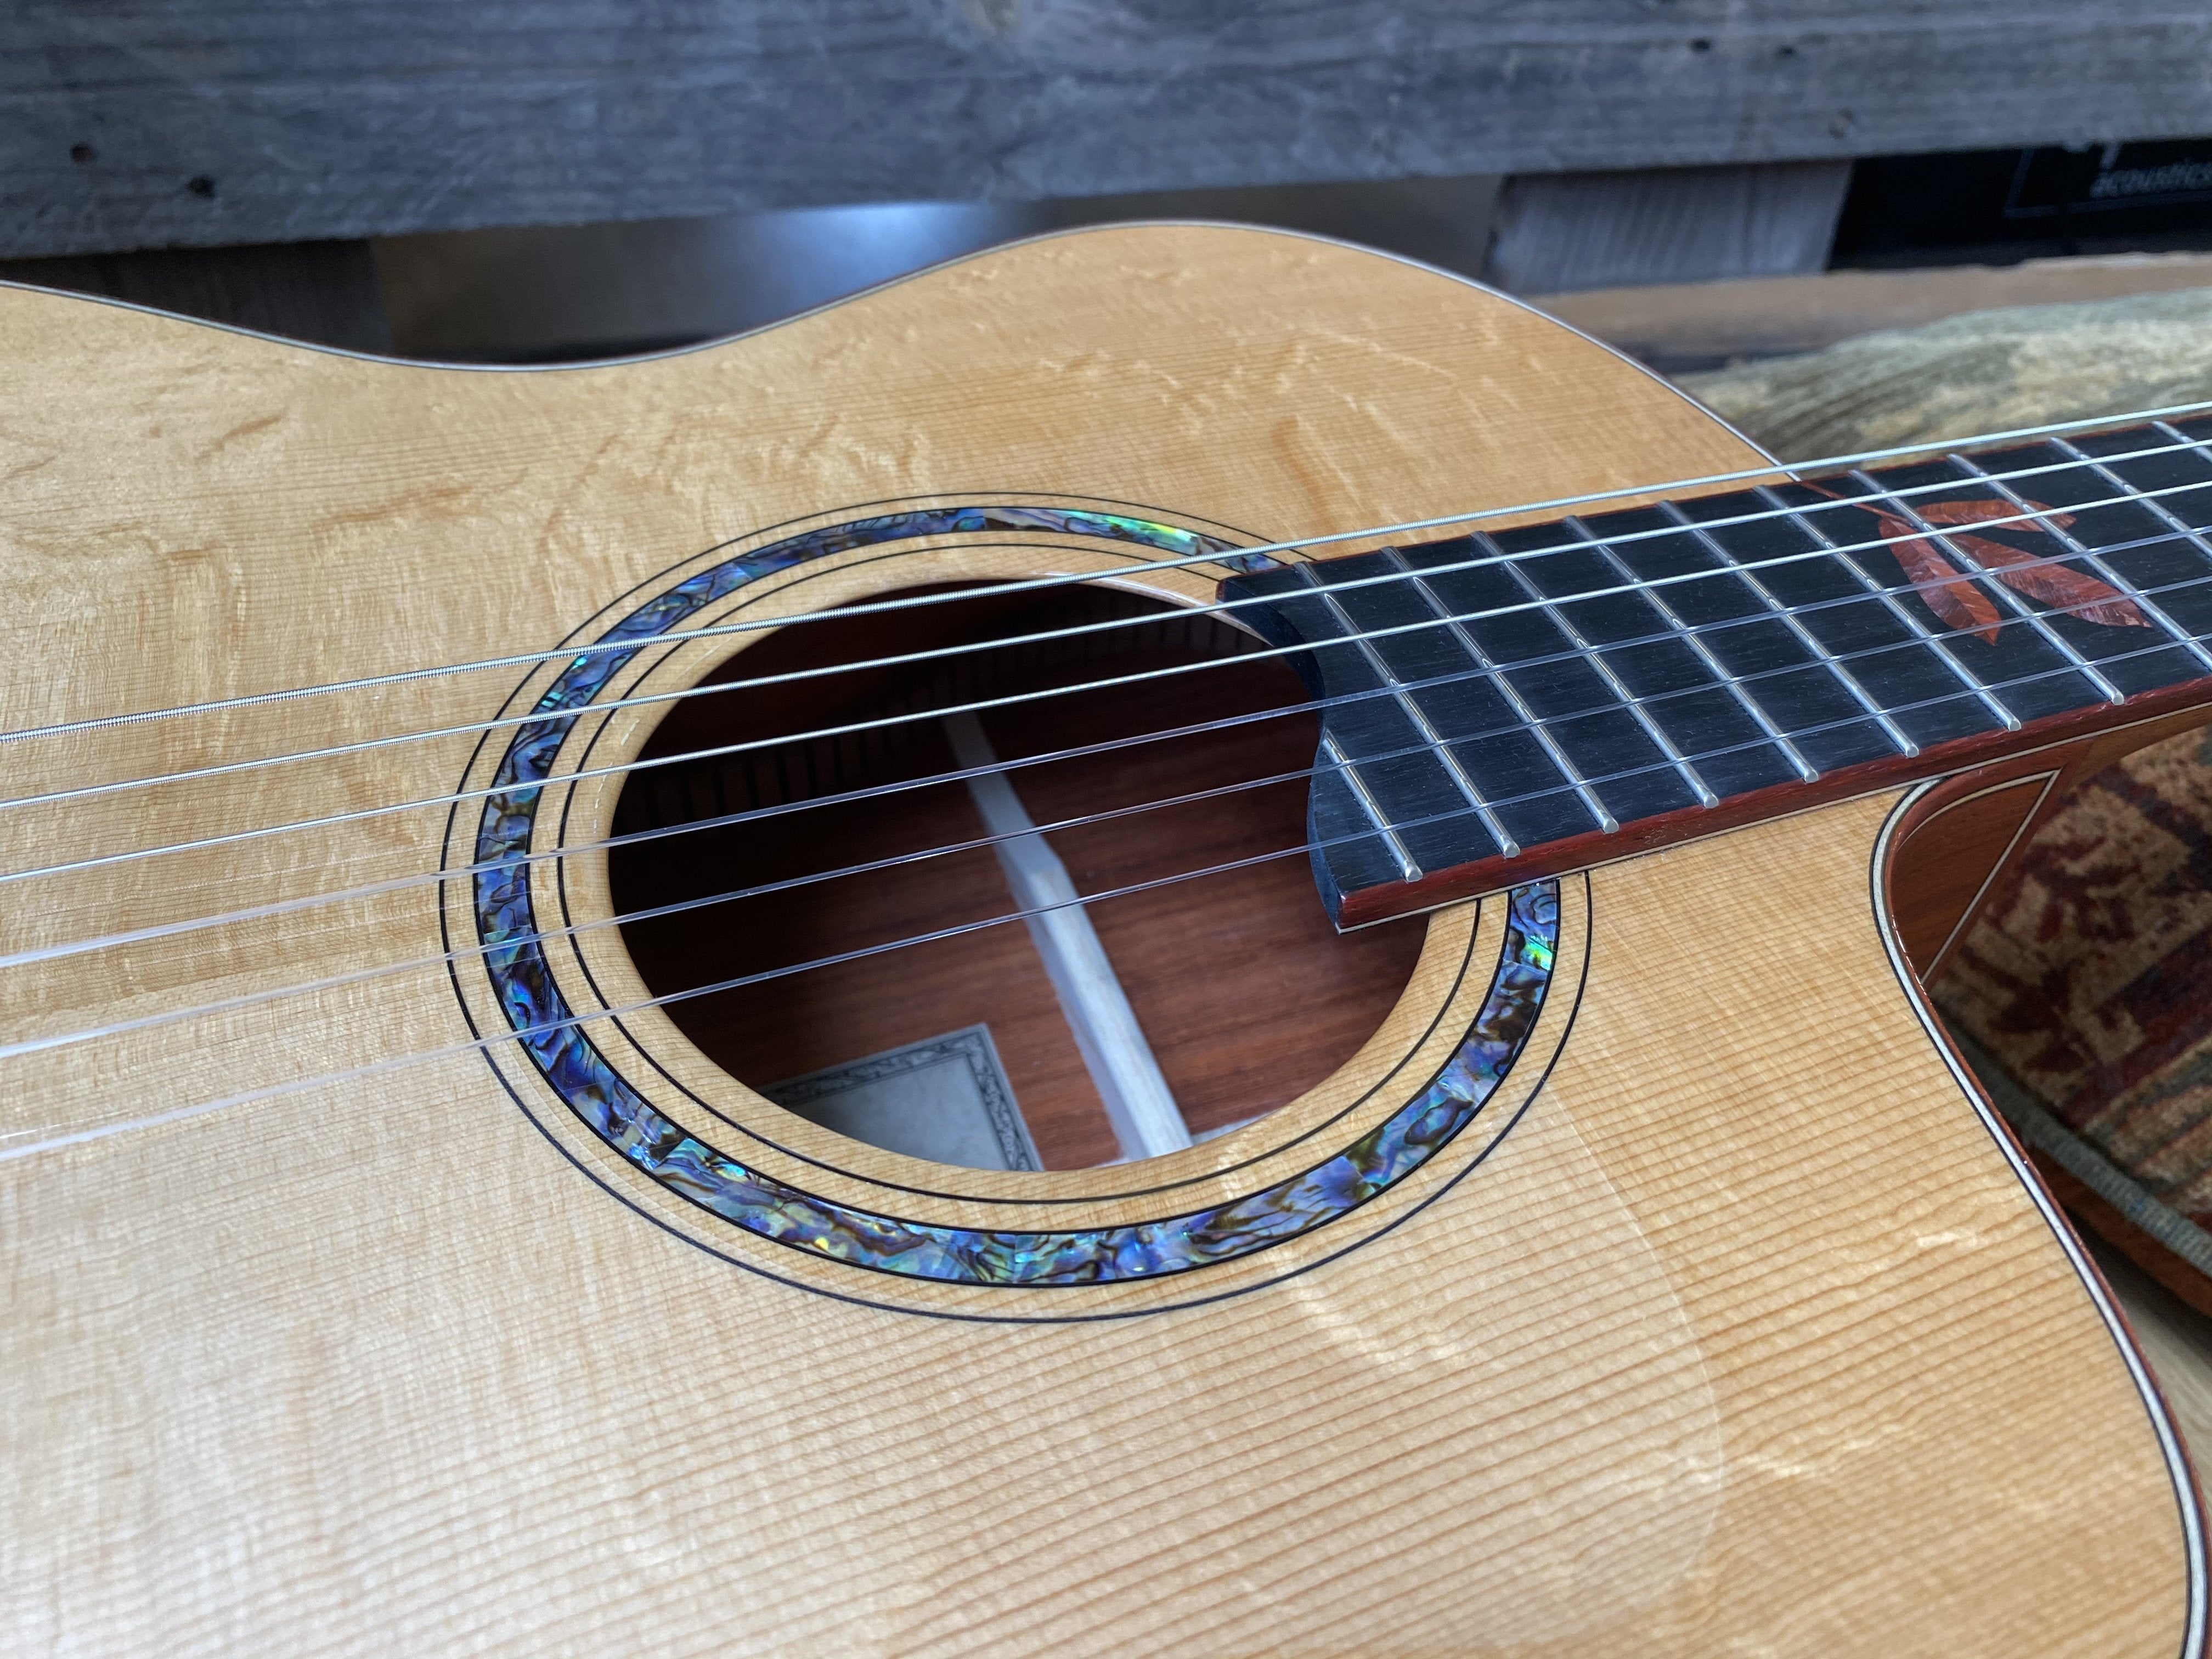 Dowina Master Built Strip Padauk HC, Acoustic Guitar for sale at Richards Guitars.